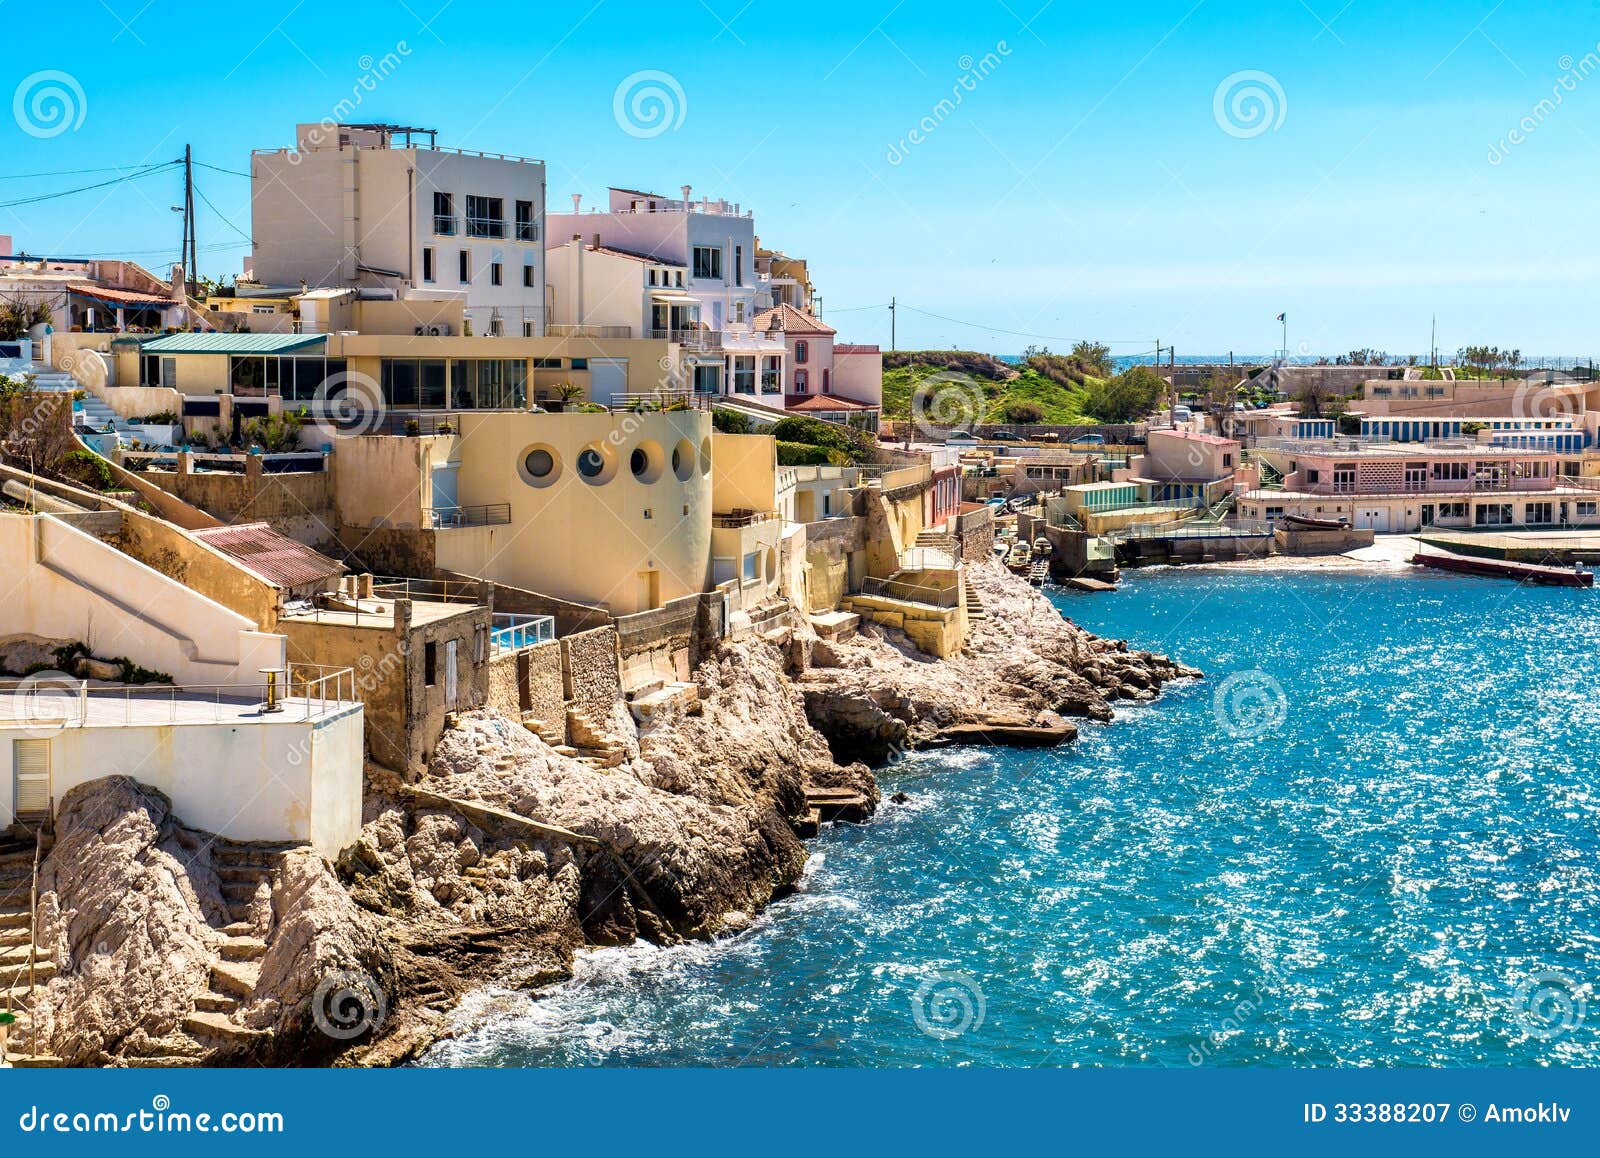 diskret kunst ordningen Marseille coast stock image. Image of marine, coastline - 33388207